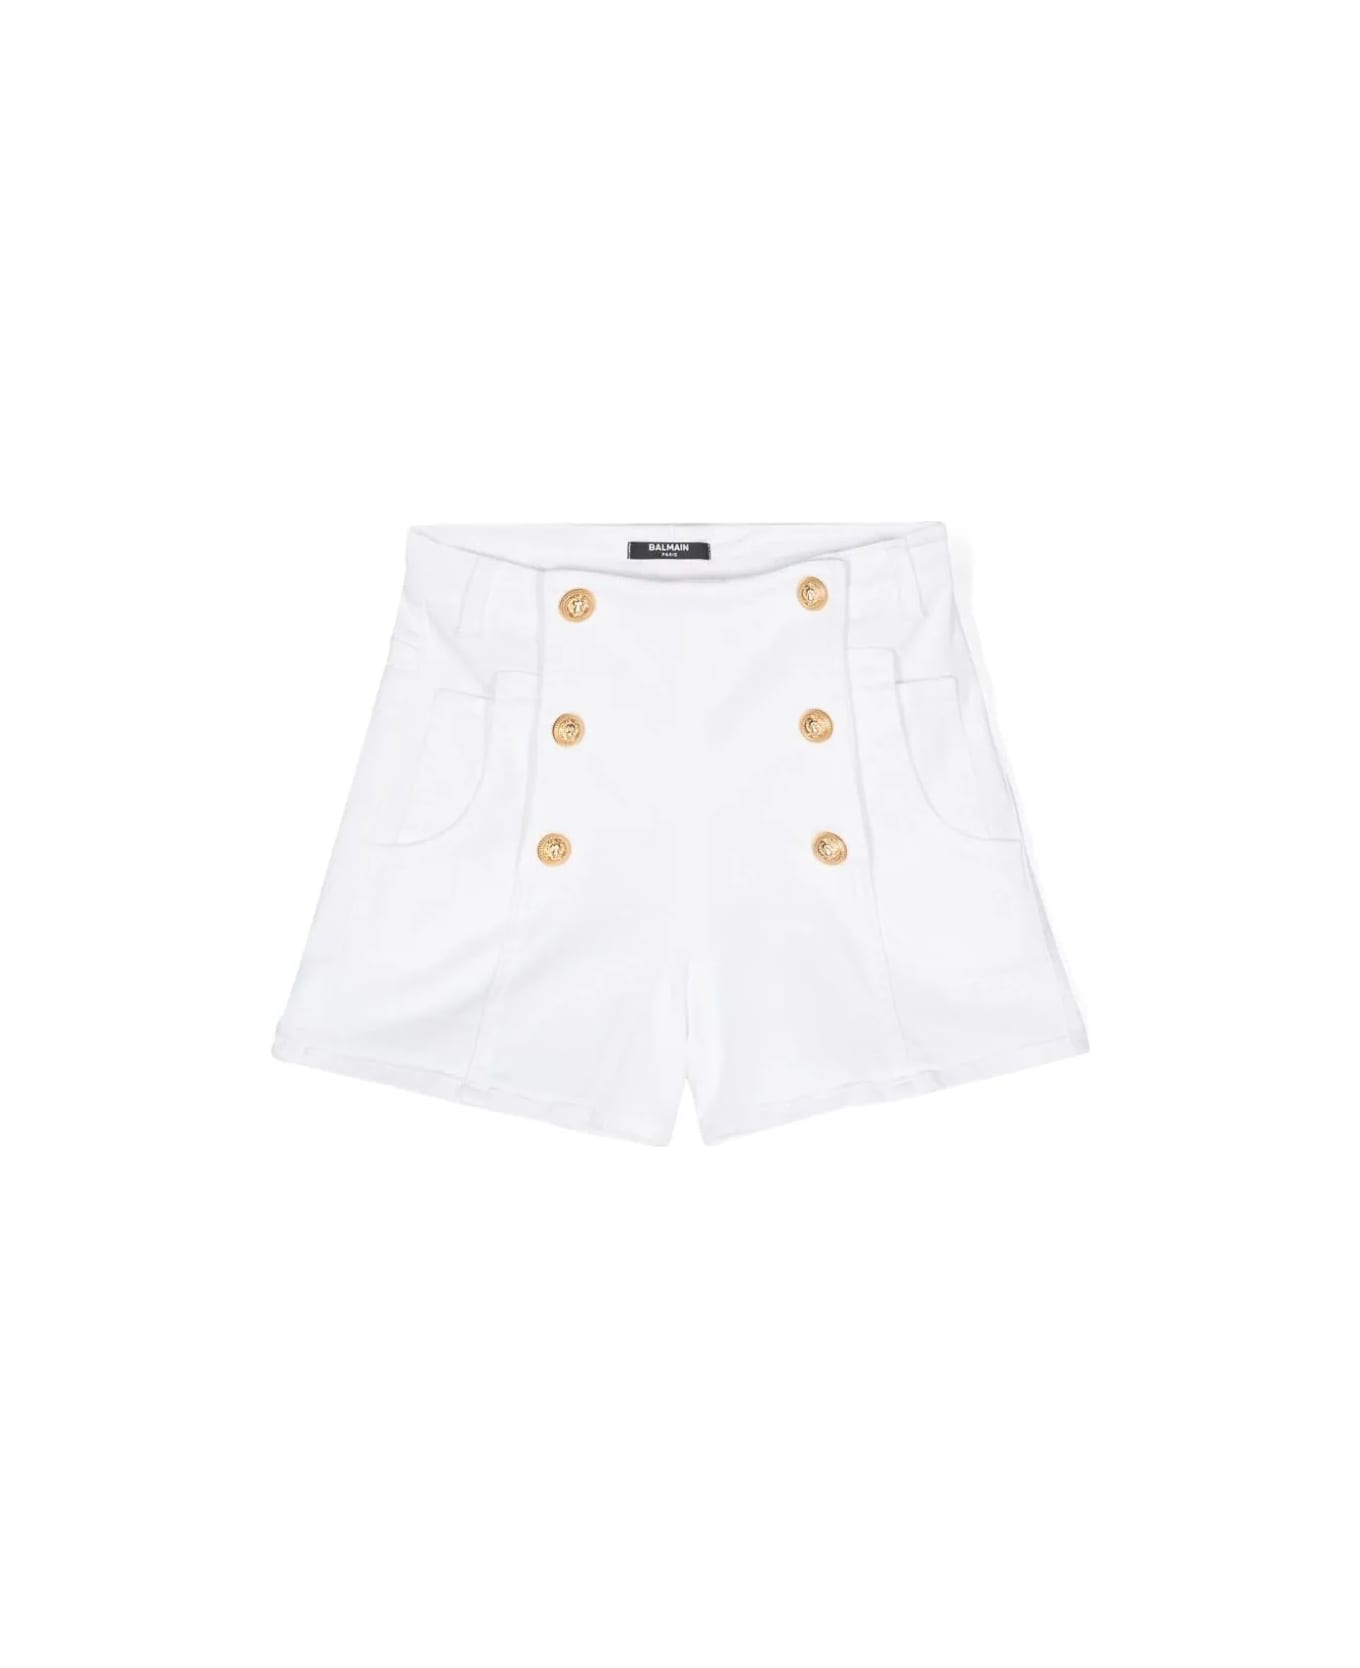 Balmain Shorts Denim - White/gold